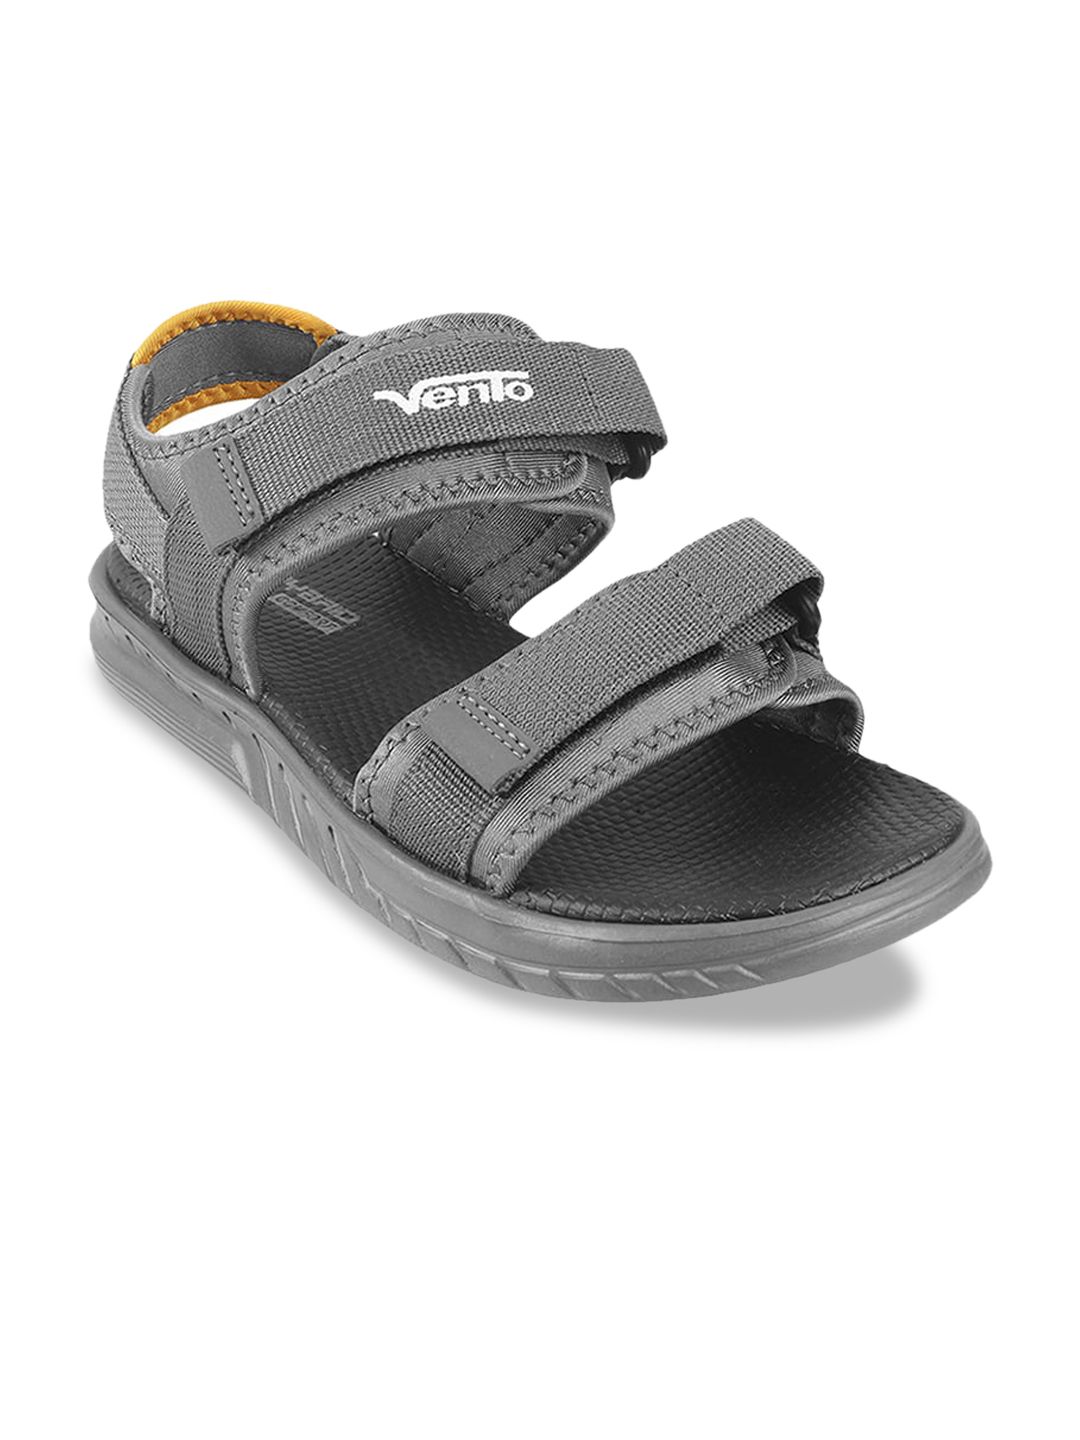 Vento Unisex Grey Sports Sandals Price in India